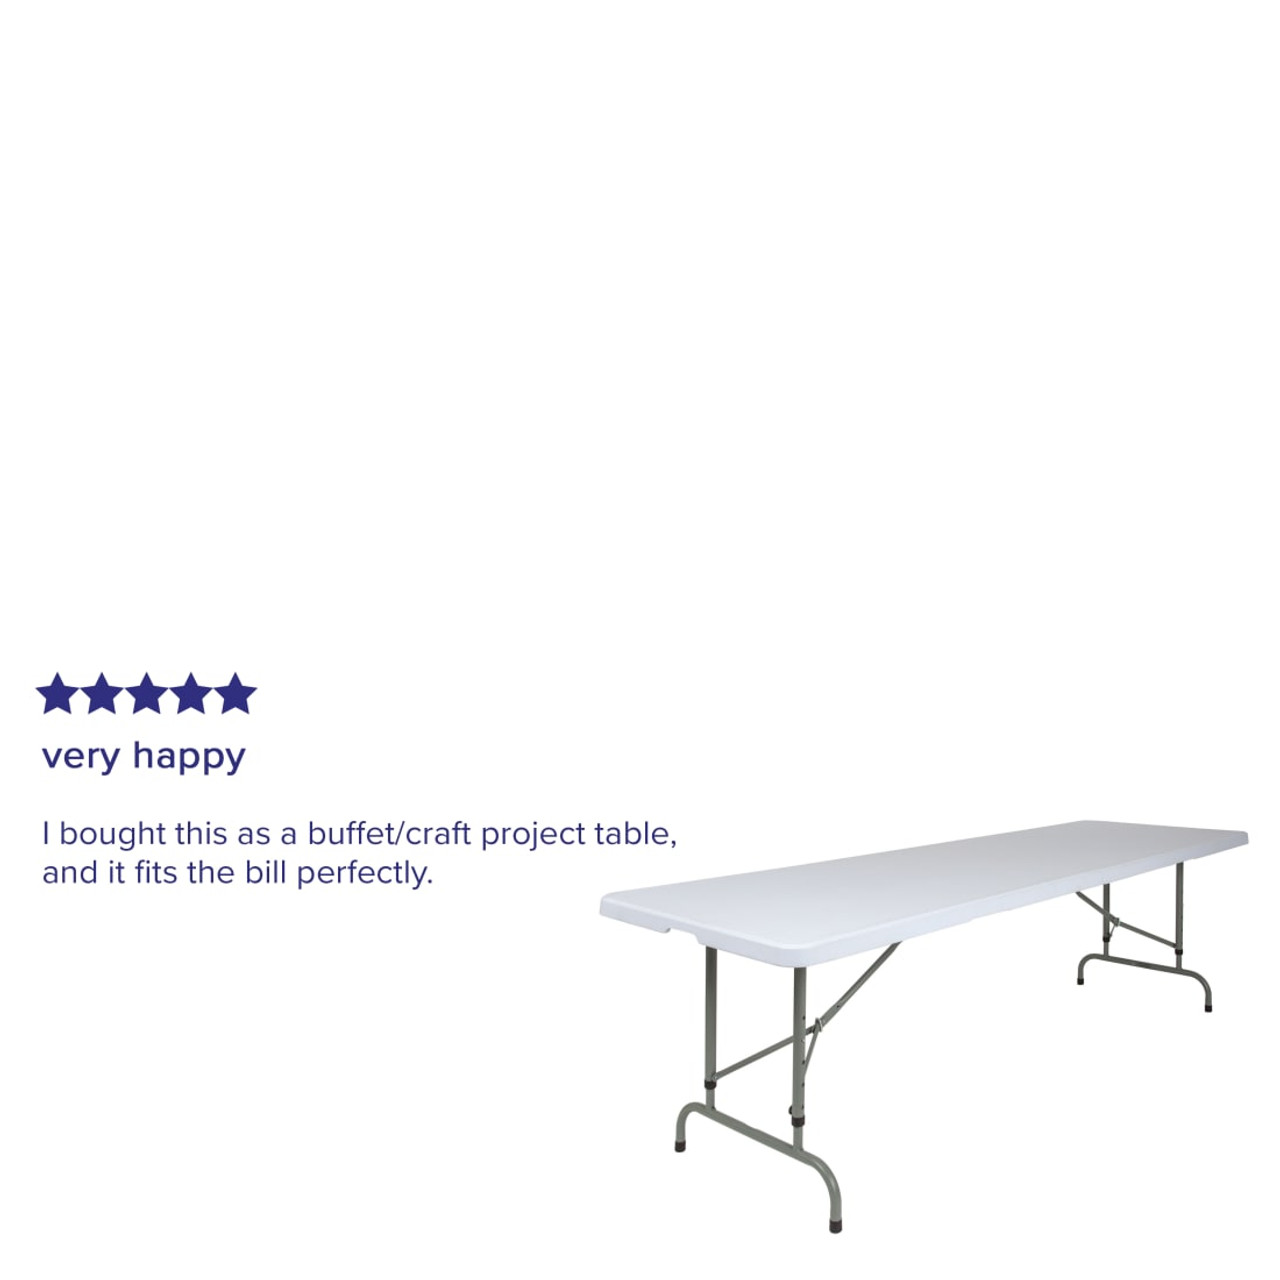 8-Foot Height Adjustable Granite White Plastic Folding Table